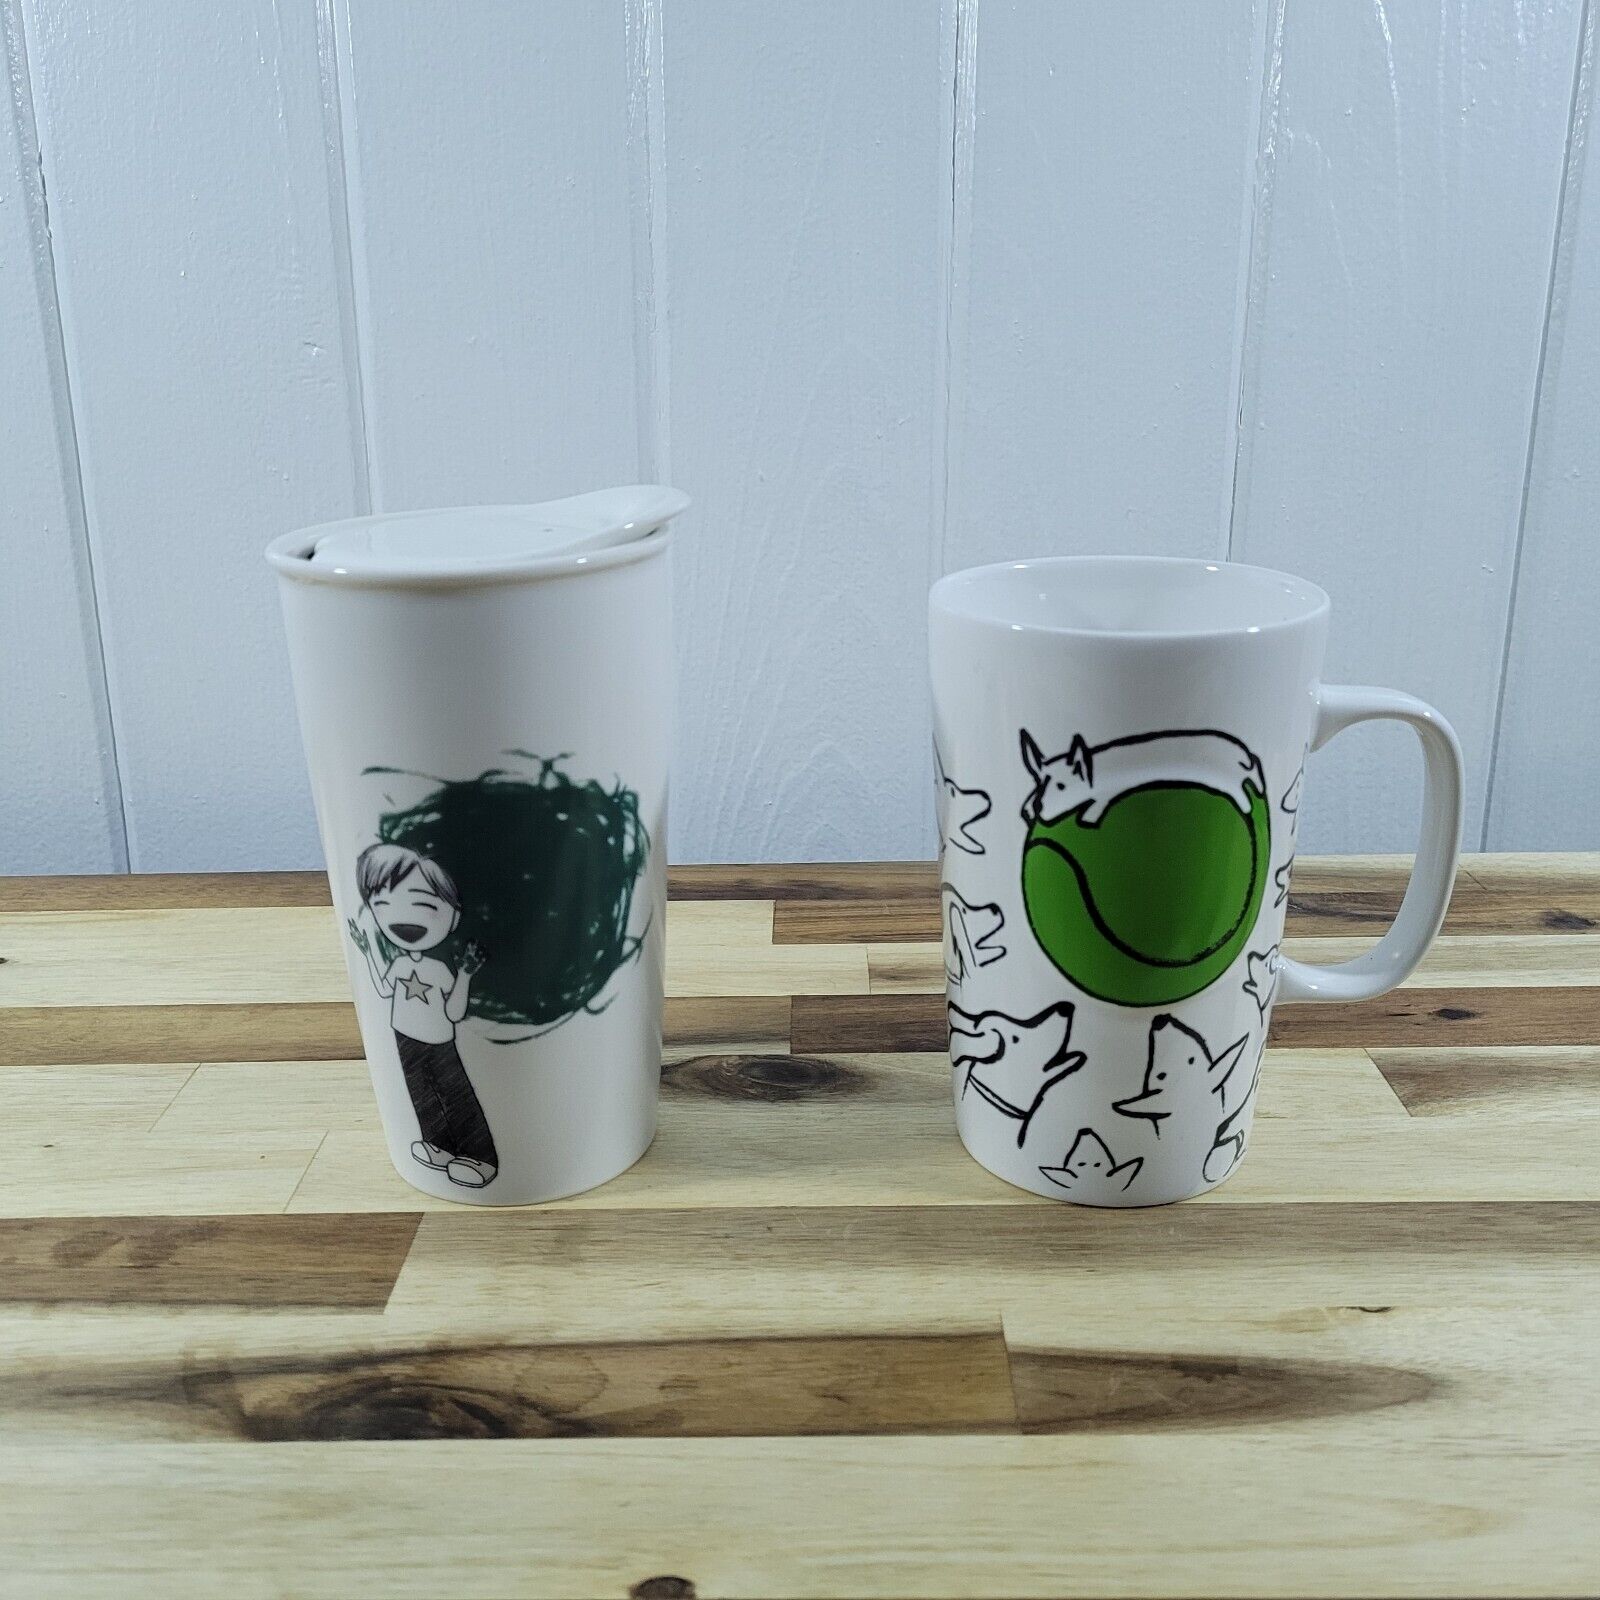 Lot of 2 Starbucks Ceramic Mugs Green Finger Paint Boy w Lid & Corgi Doodle Dogs